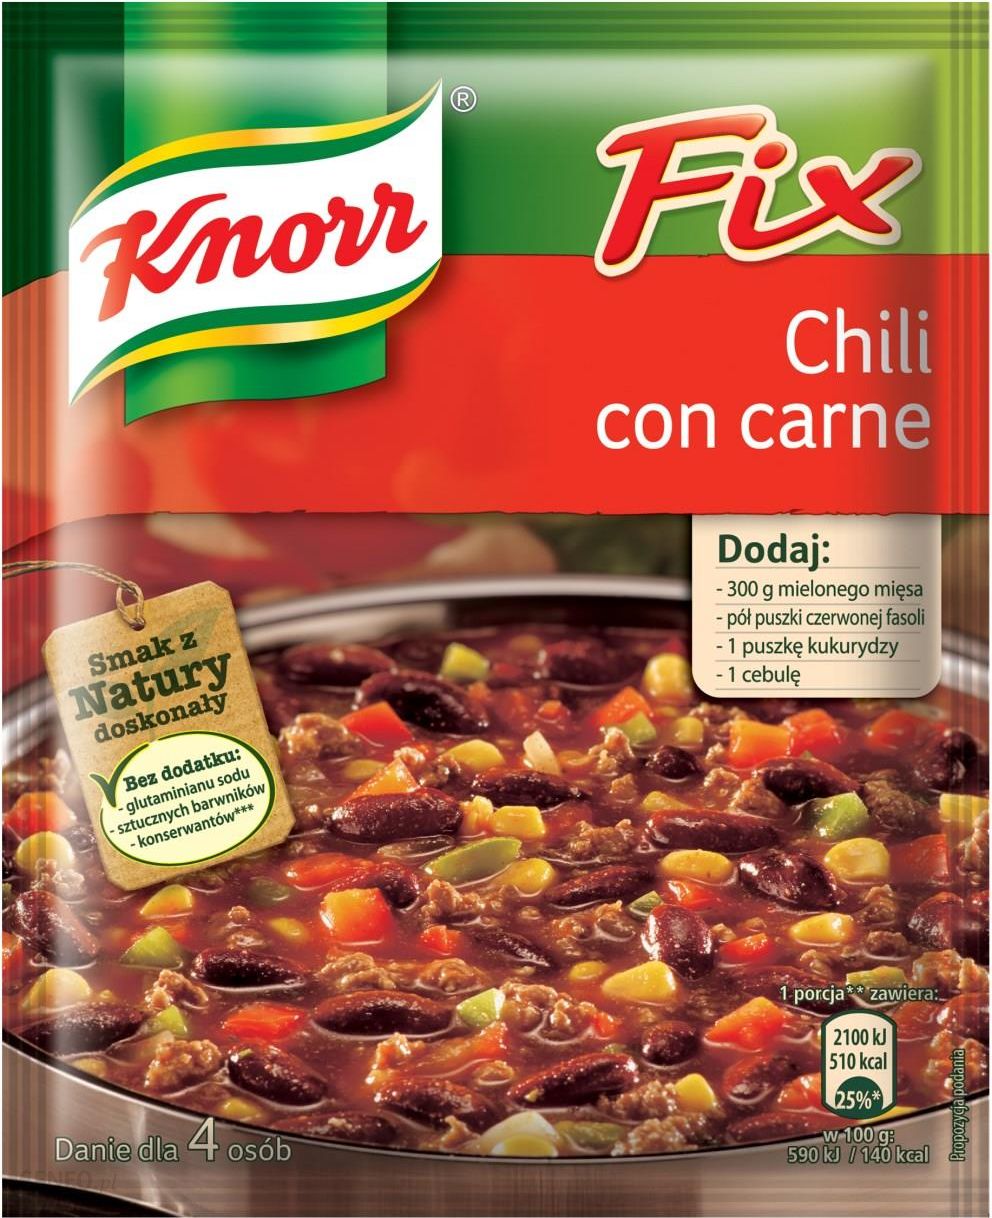 Knorr Chili Con Carne